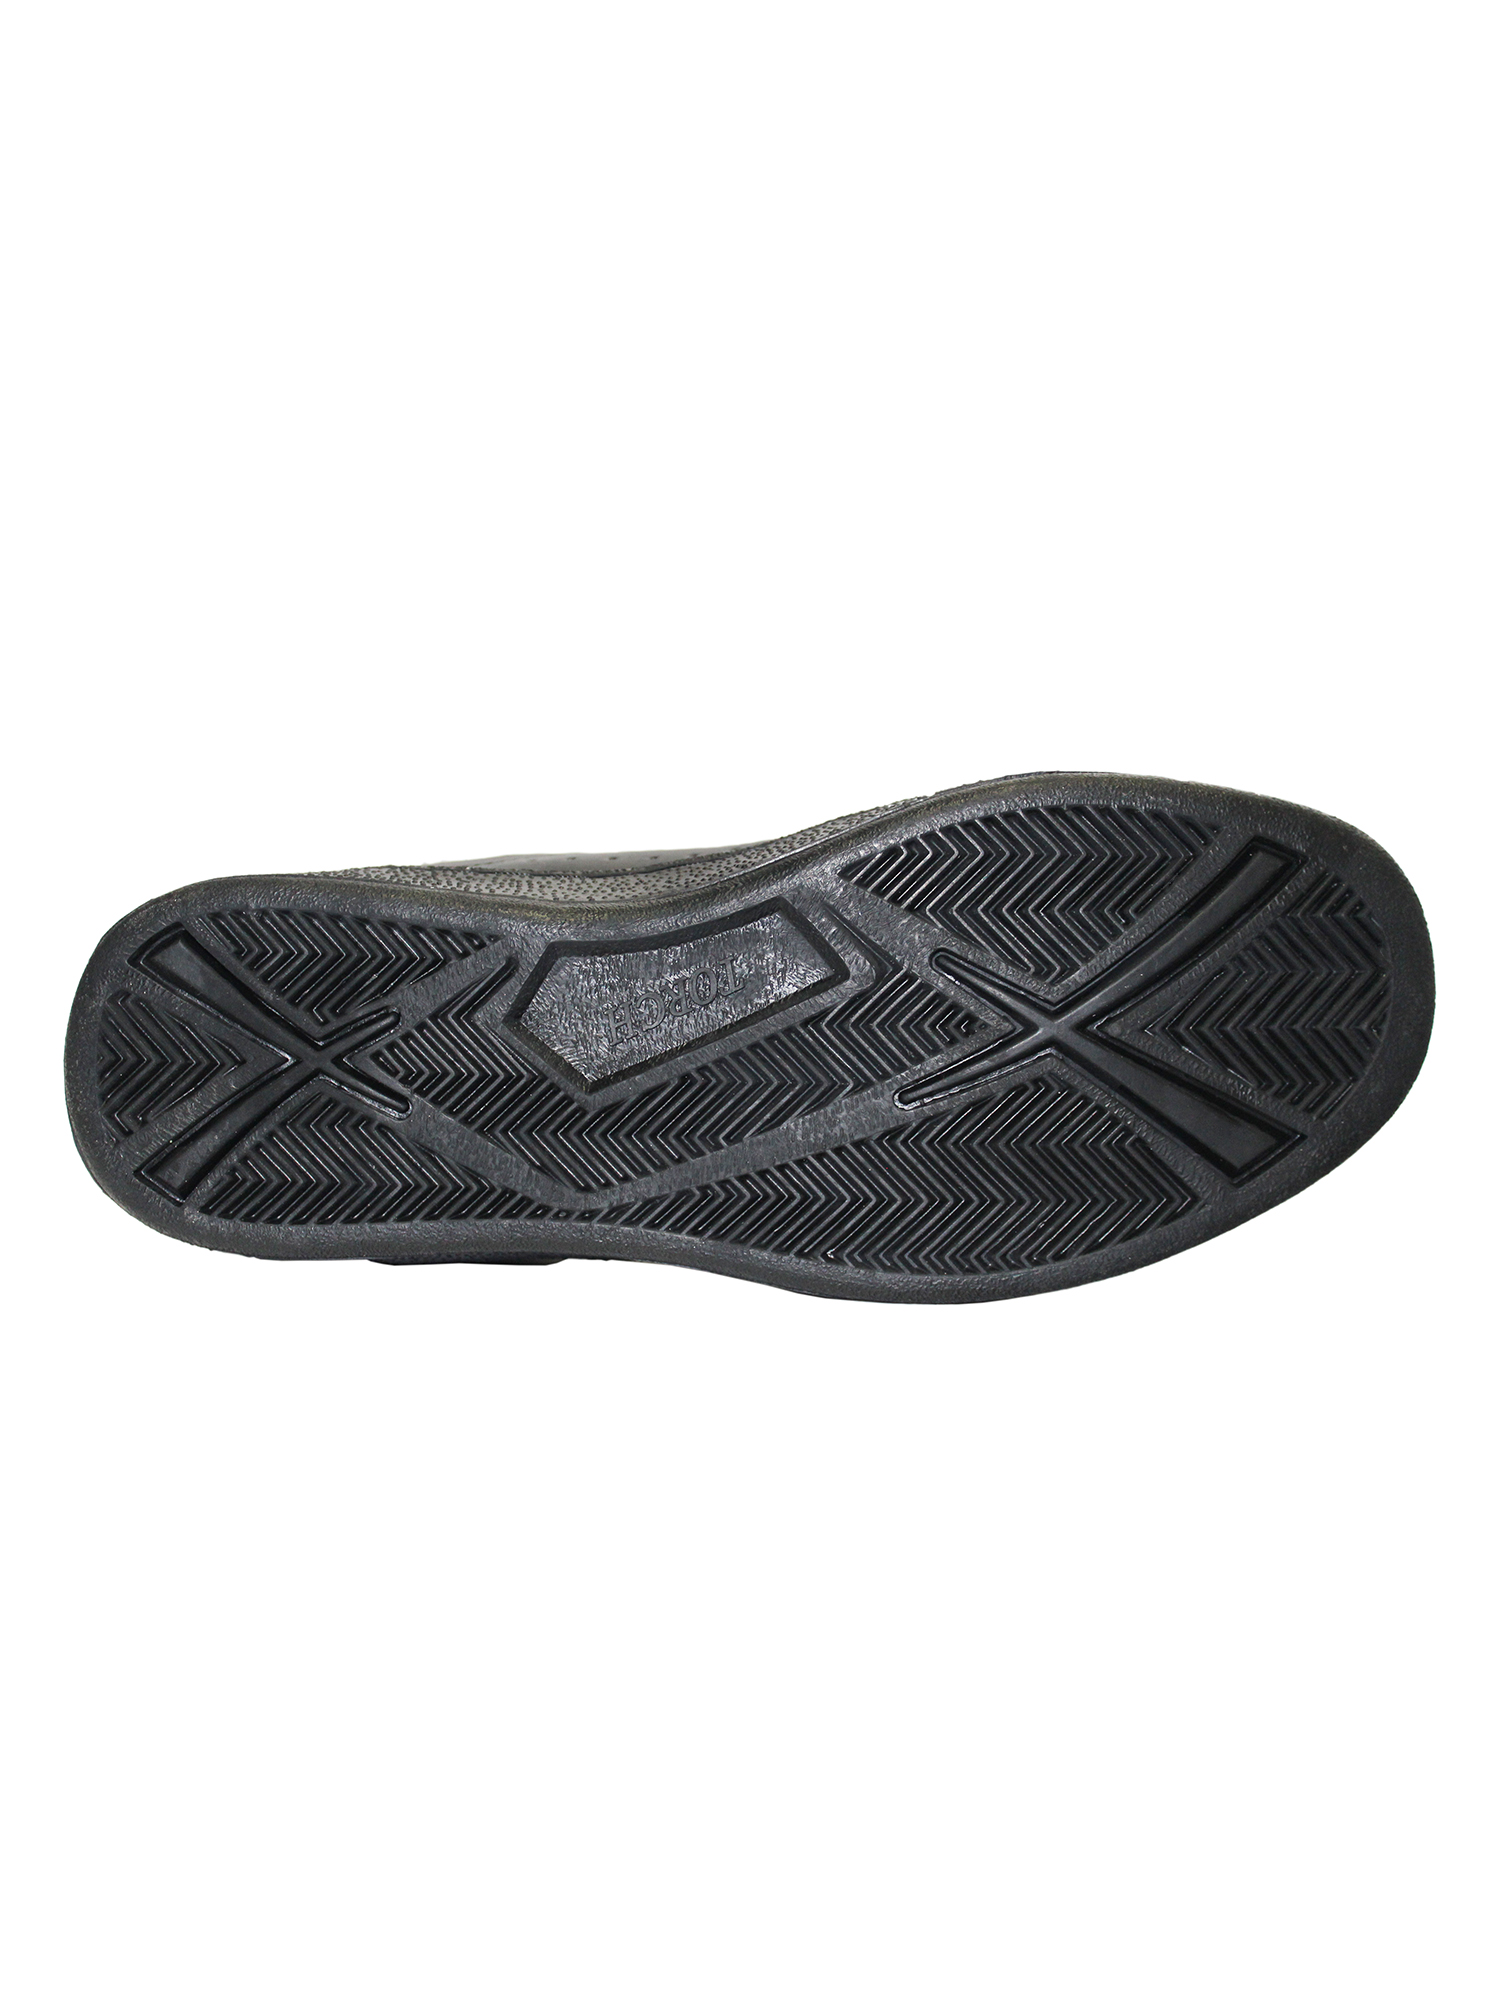 Tanleewa Men's Leather Strap Sneakers Lightweight Hook and Loop Walking Shoe Size 5.5 Adult Male - image 3 of 4